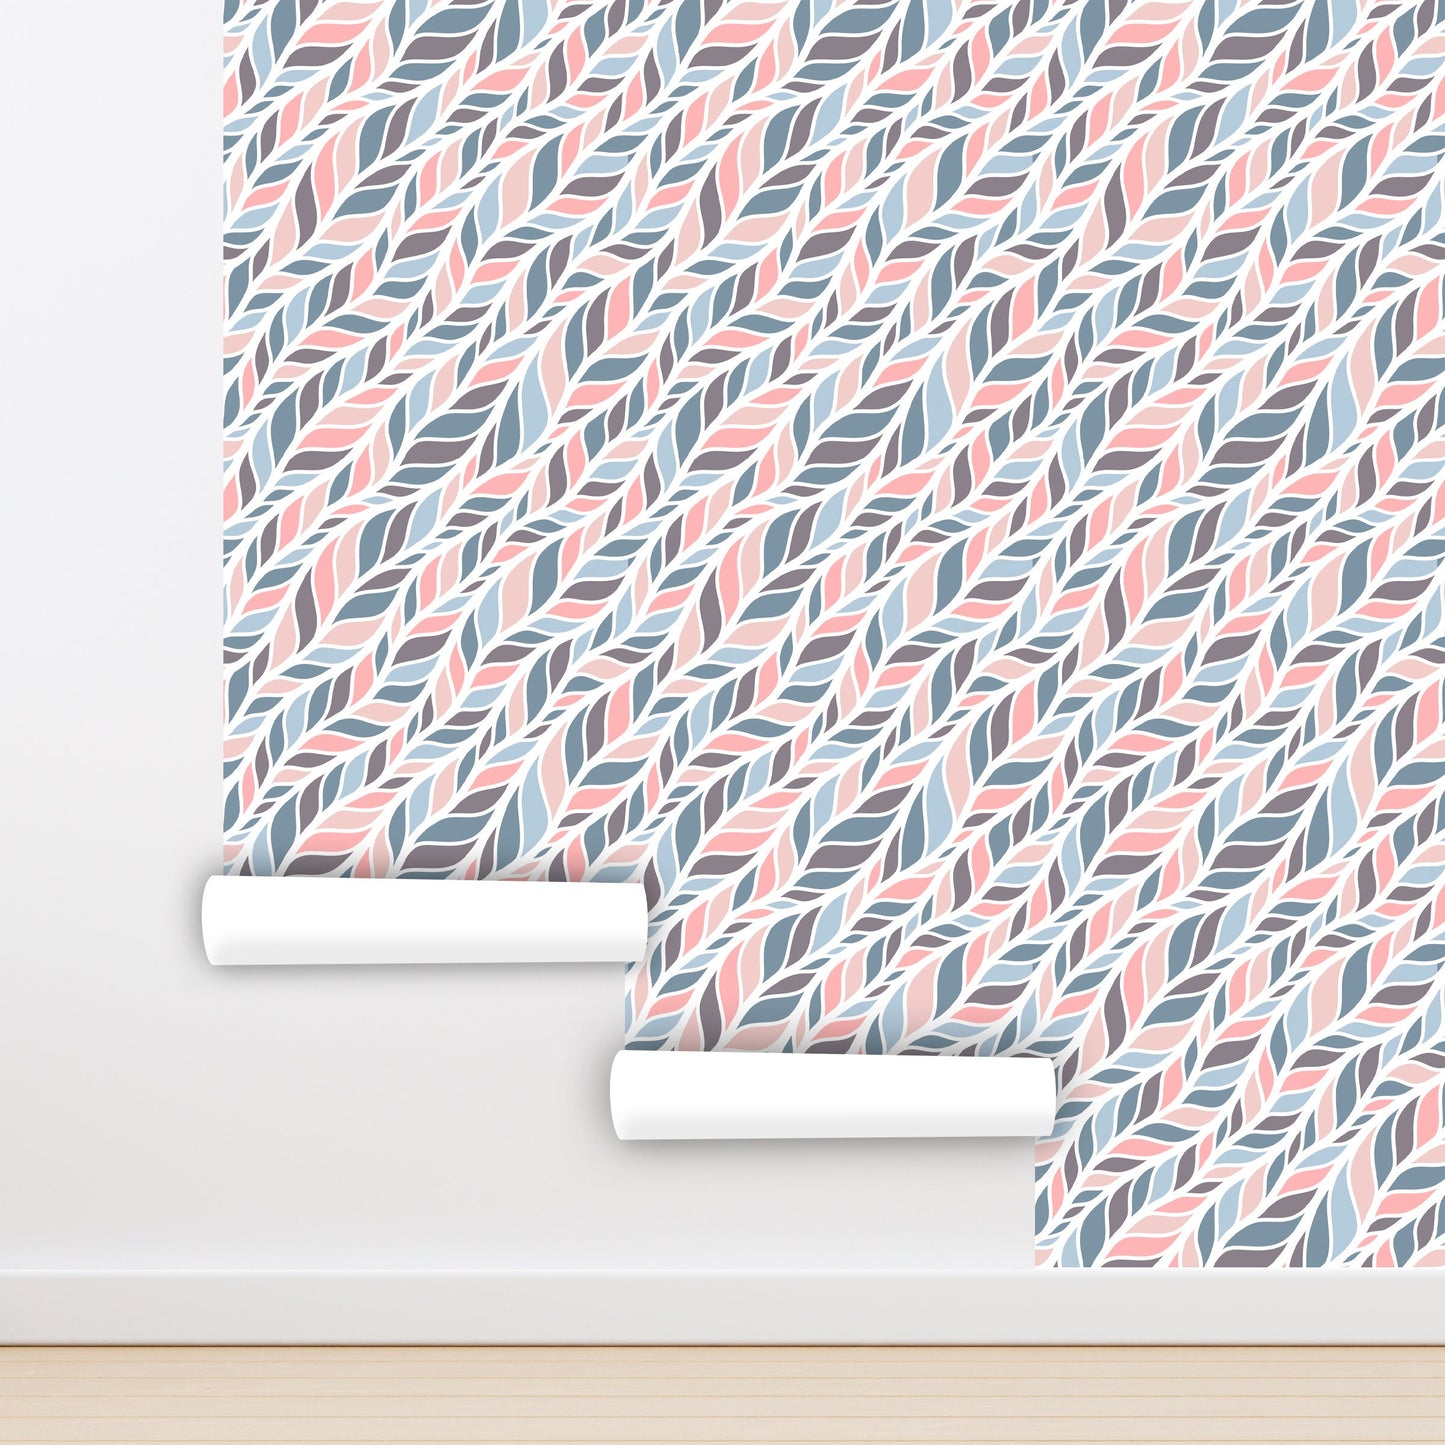 Wallpaper Sweater, Herringbone Wallpaper, Geometric Wallpaper Peel and Stick, Abstract Wallpaper, Removable Wall Paper